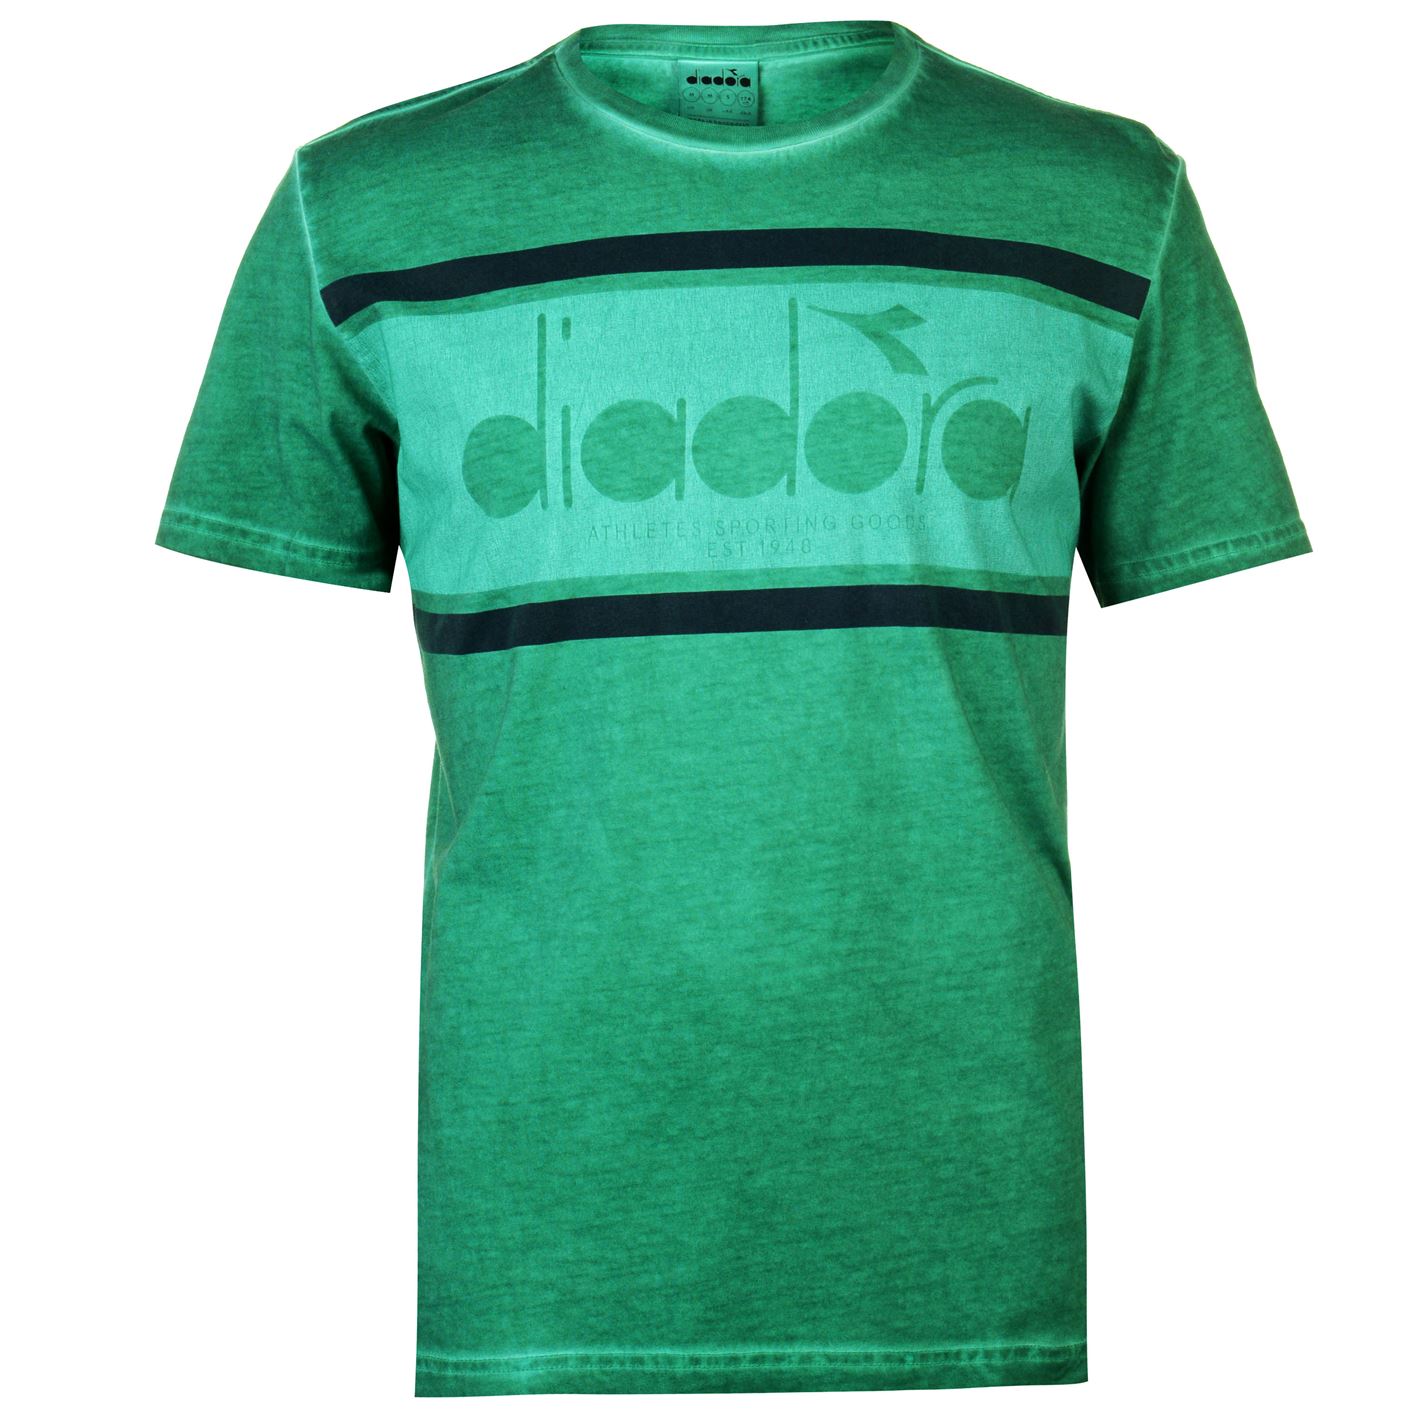 Tricou Diadora Spectra pentru Barbati verdant verde